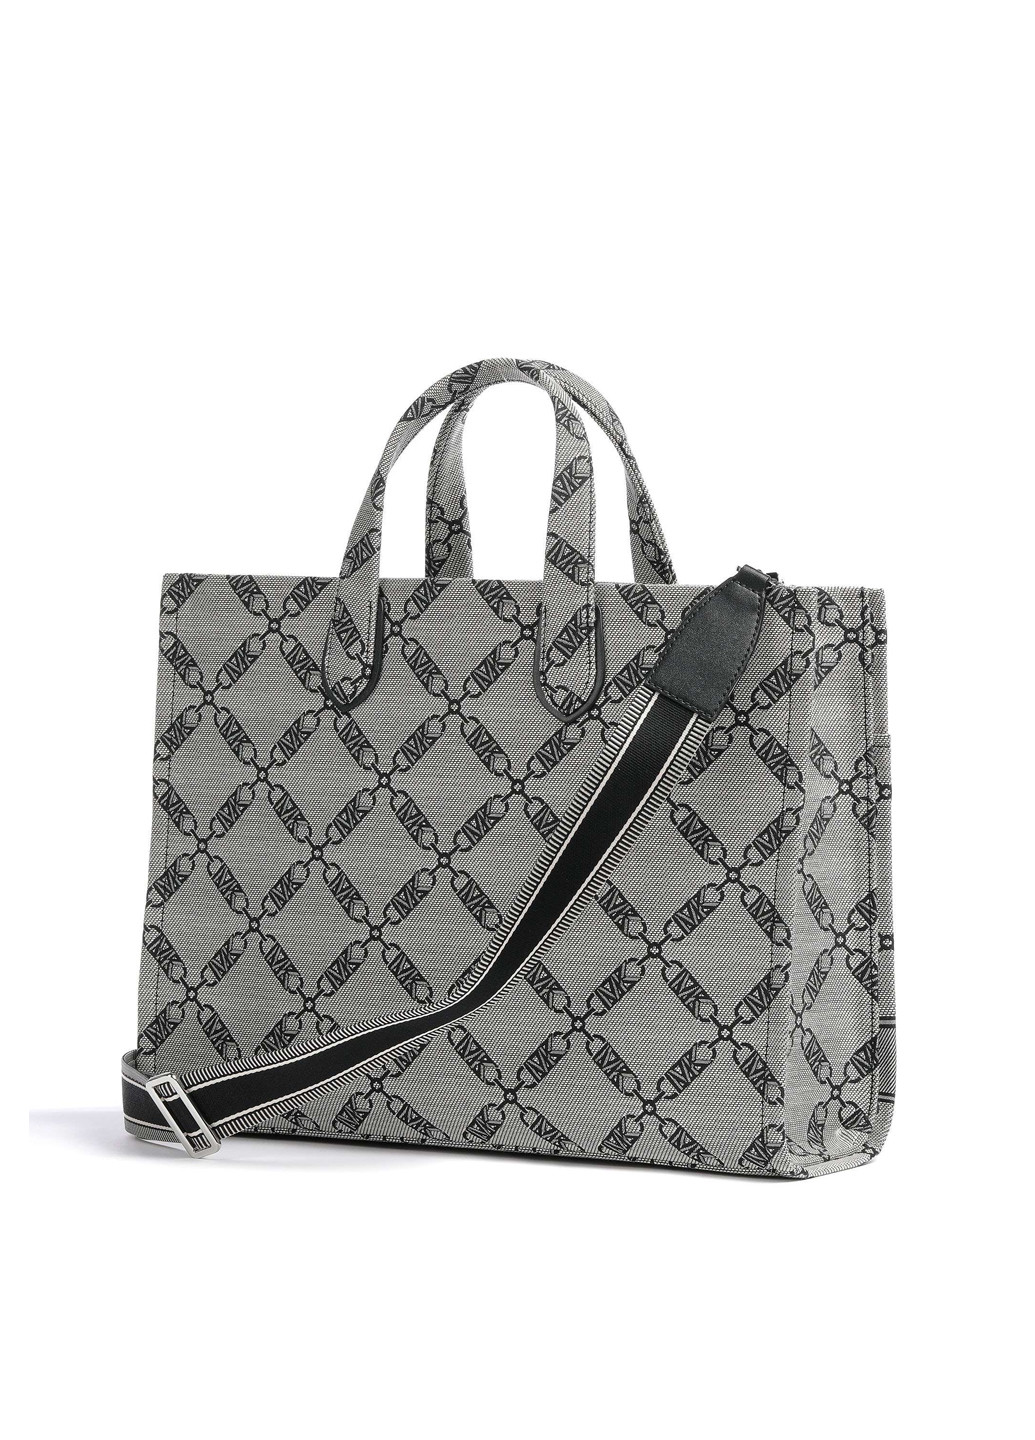 Сумка женская из жакардовая Michael Kors gigi large empire logo jacquard tote bag (261324597)